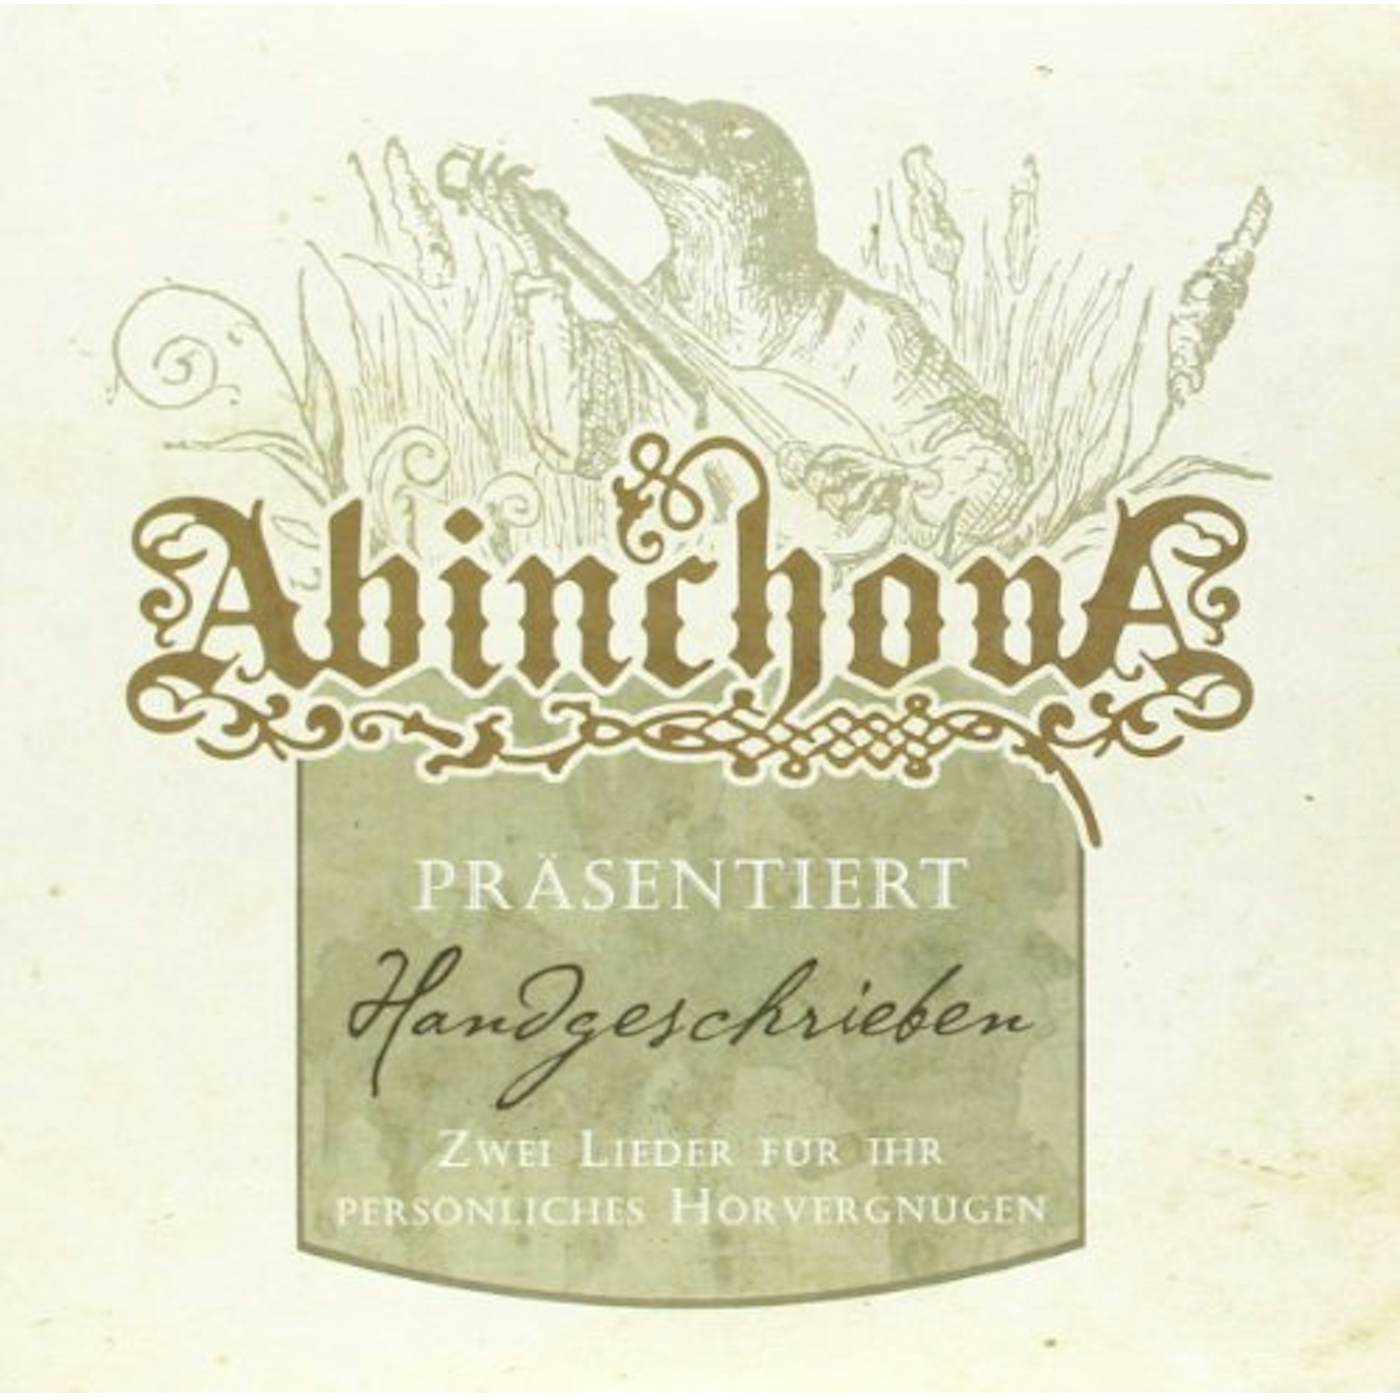 Abinchova Handgeschrieben Vinyl Record